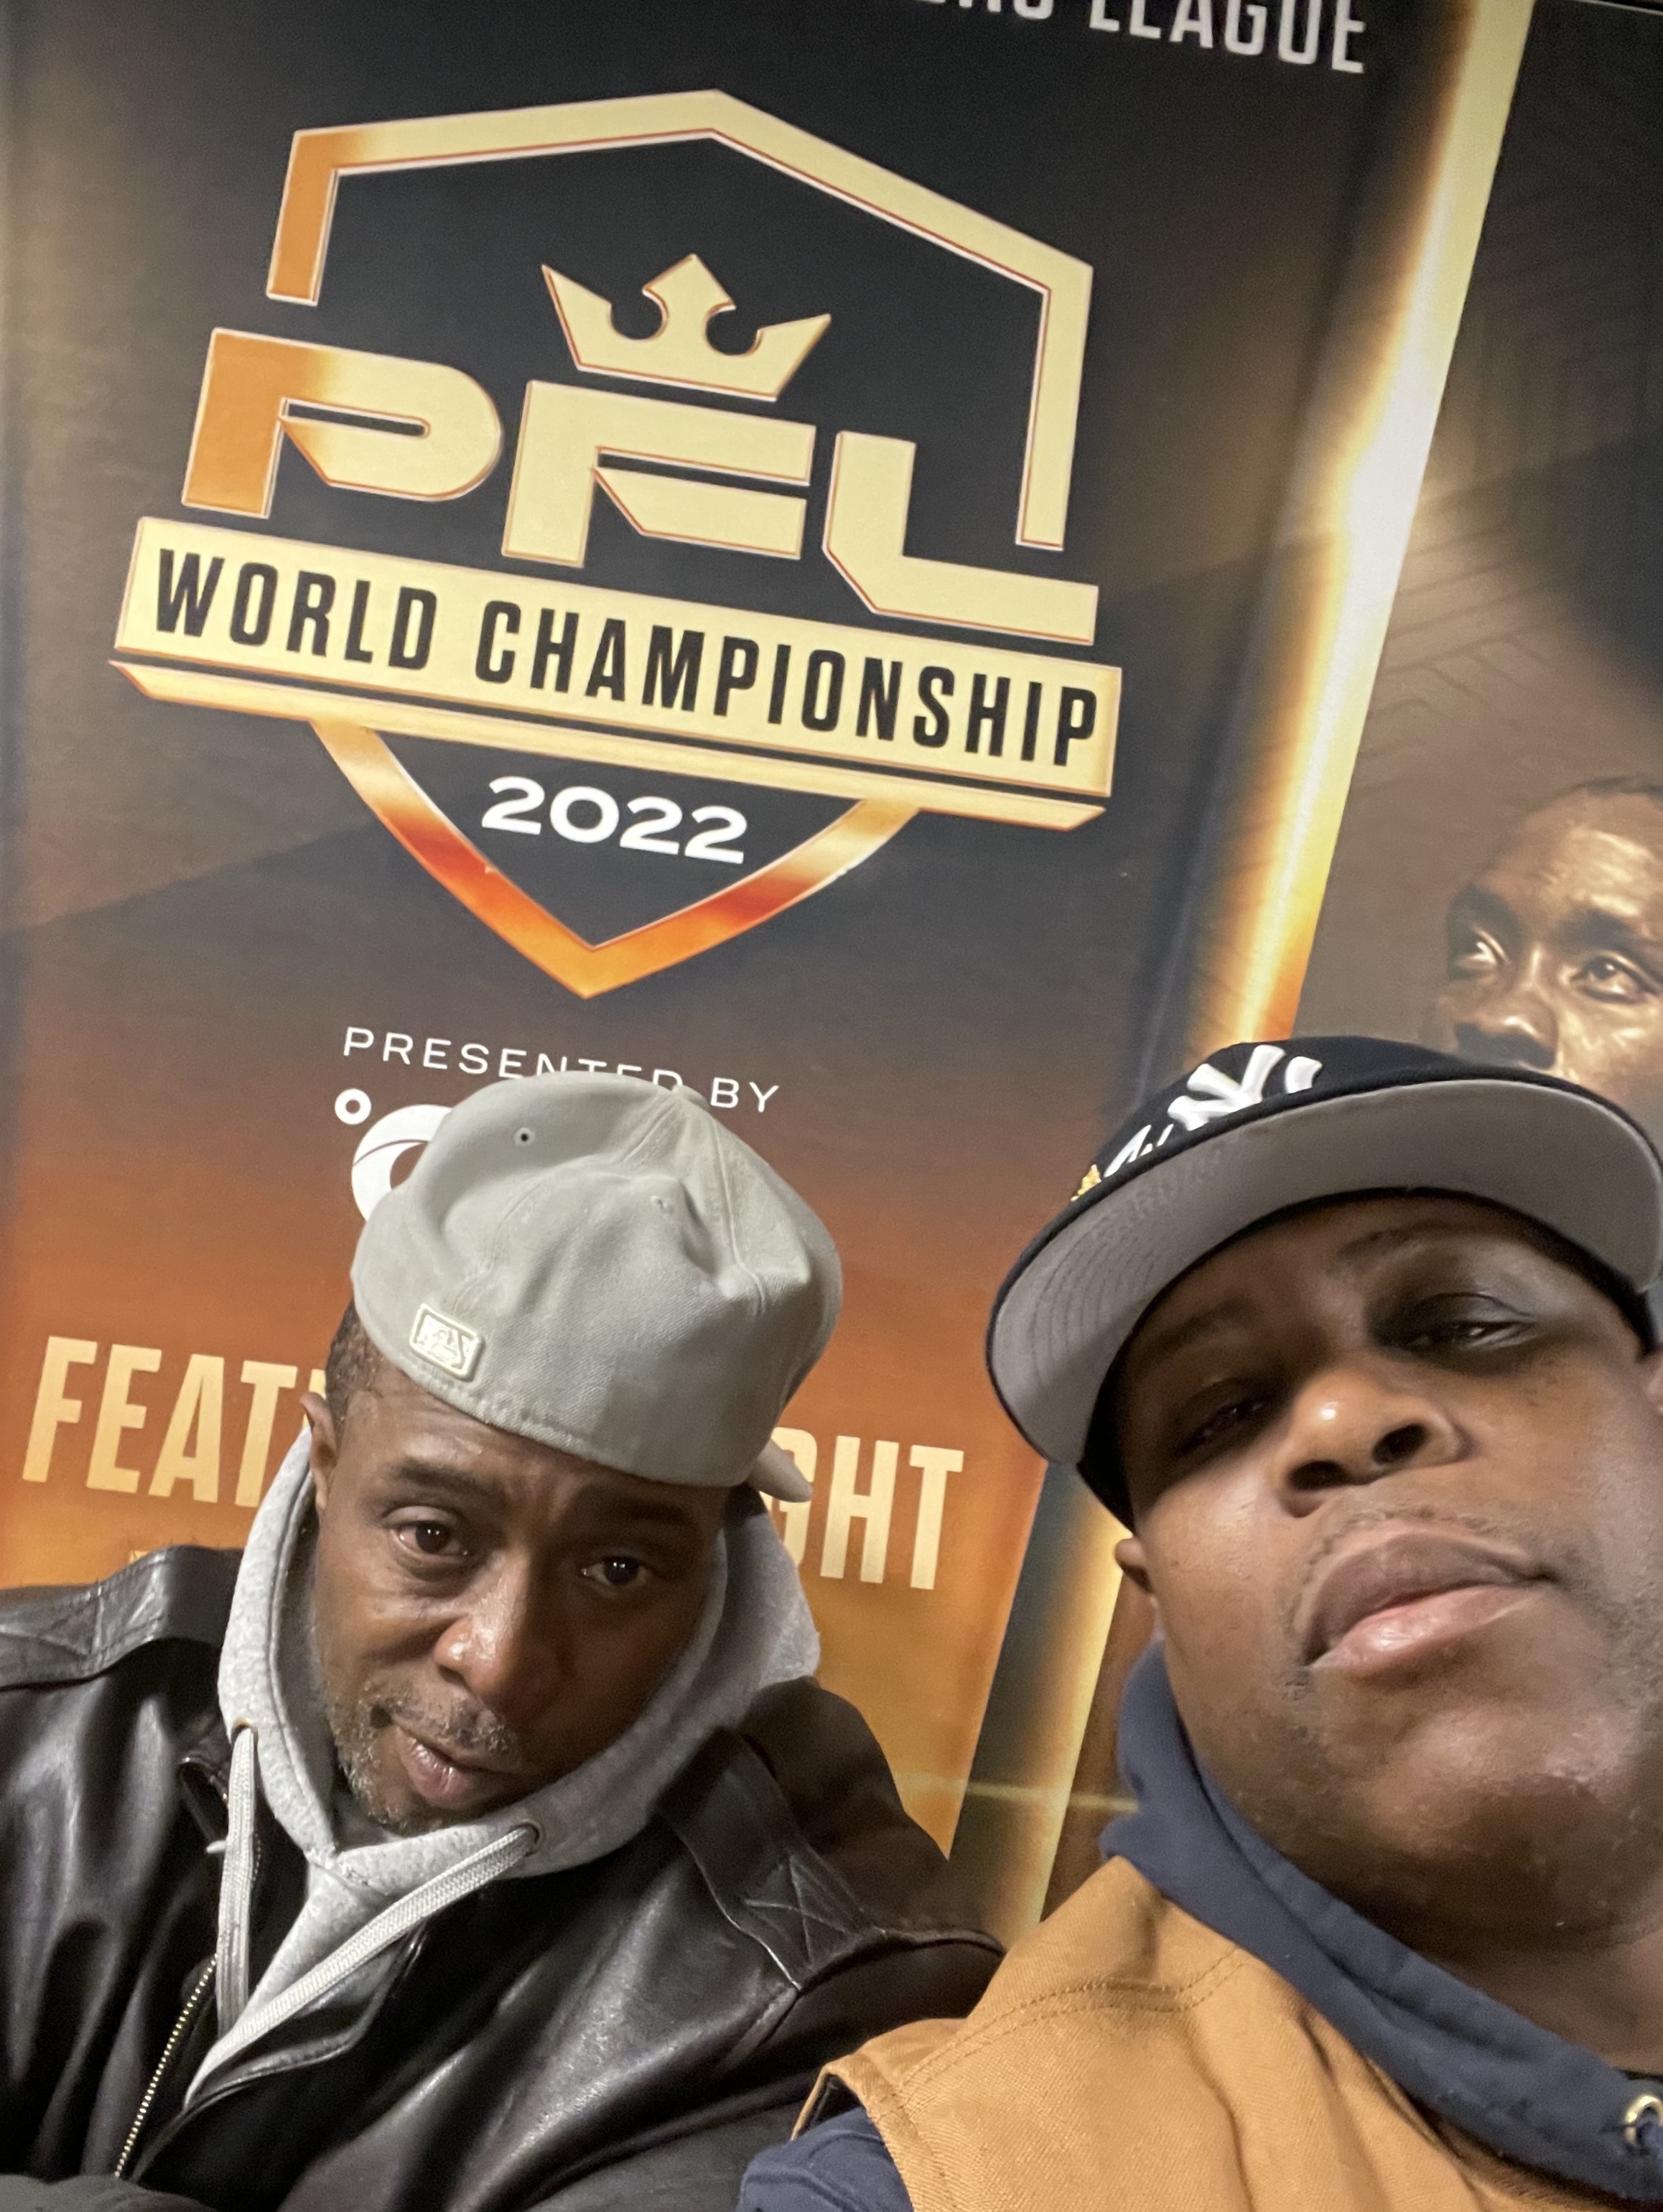 Pfl MMA 2022 Championship